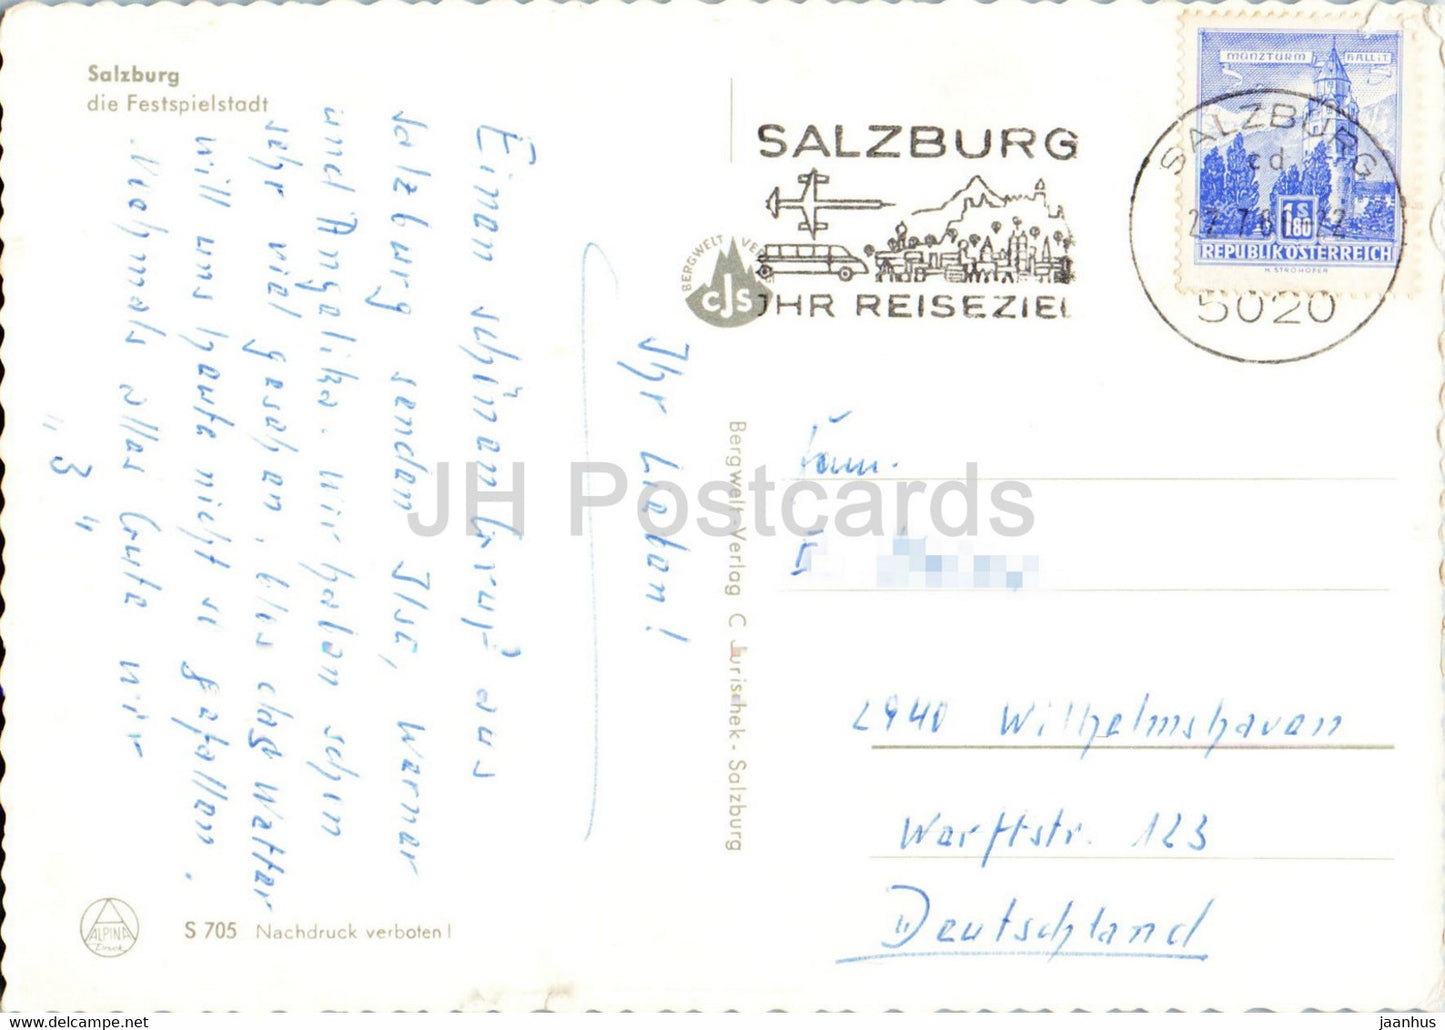 Salzburg die Festspielstadt - 1972 - Austria - used